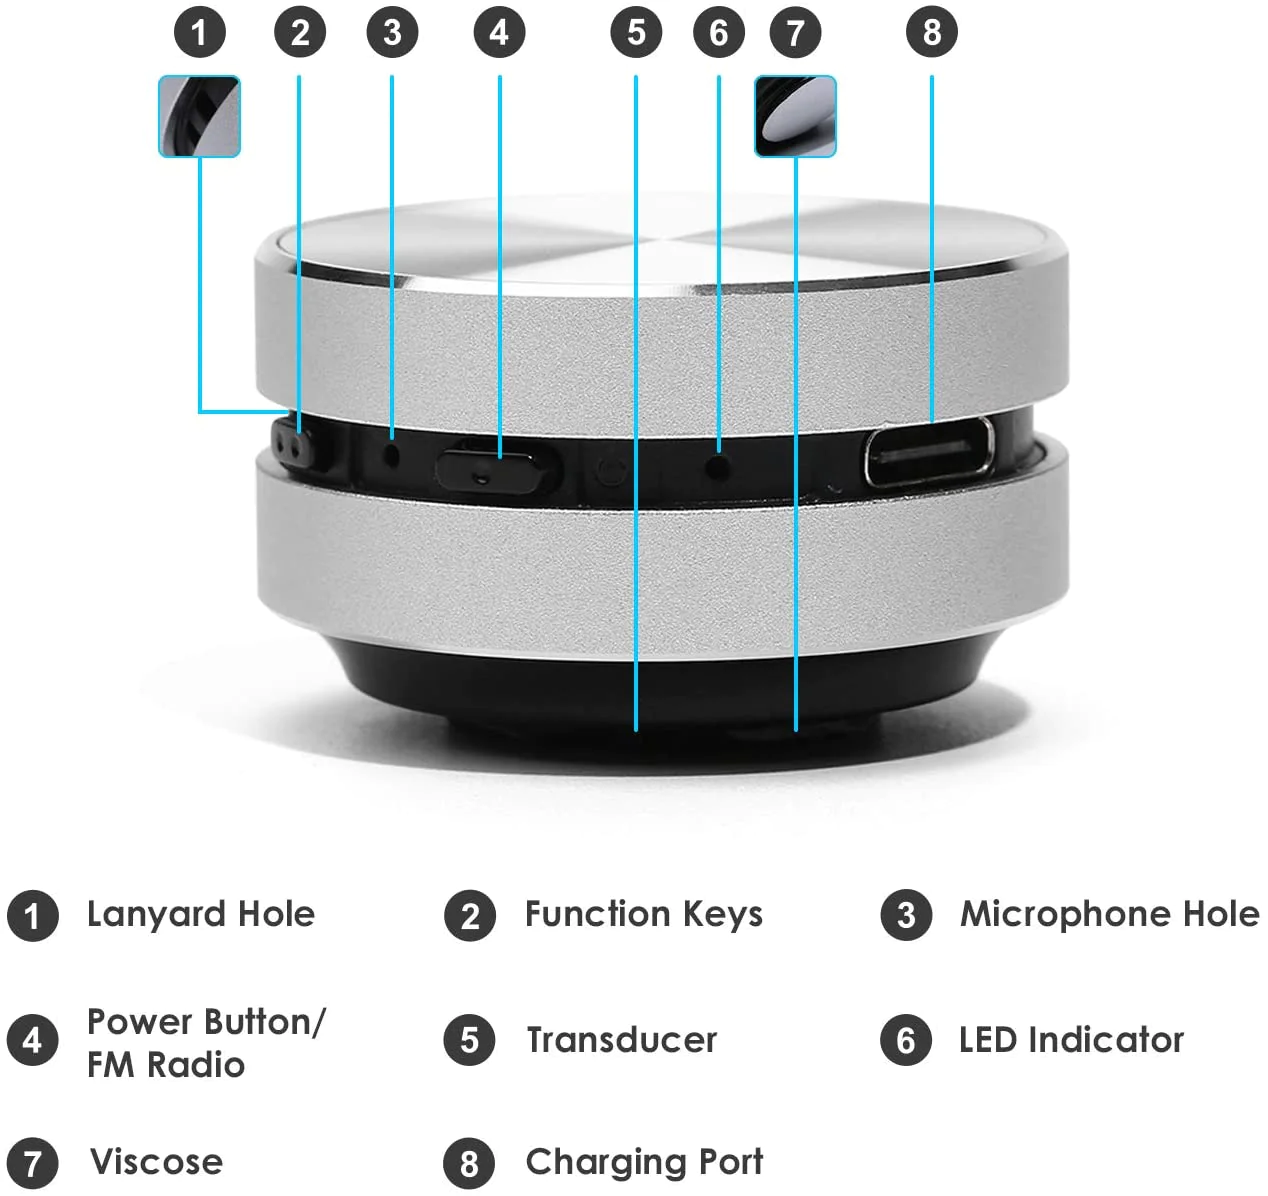 Bluetooth speaker Bone conduction | Mini Wireless Bluetooth Speaker | bose bluetooth speaker | speaker bluetooth | best portable bluetooth speaker